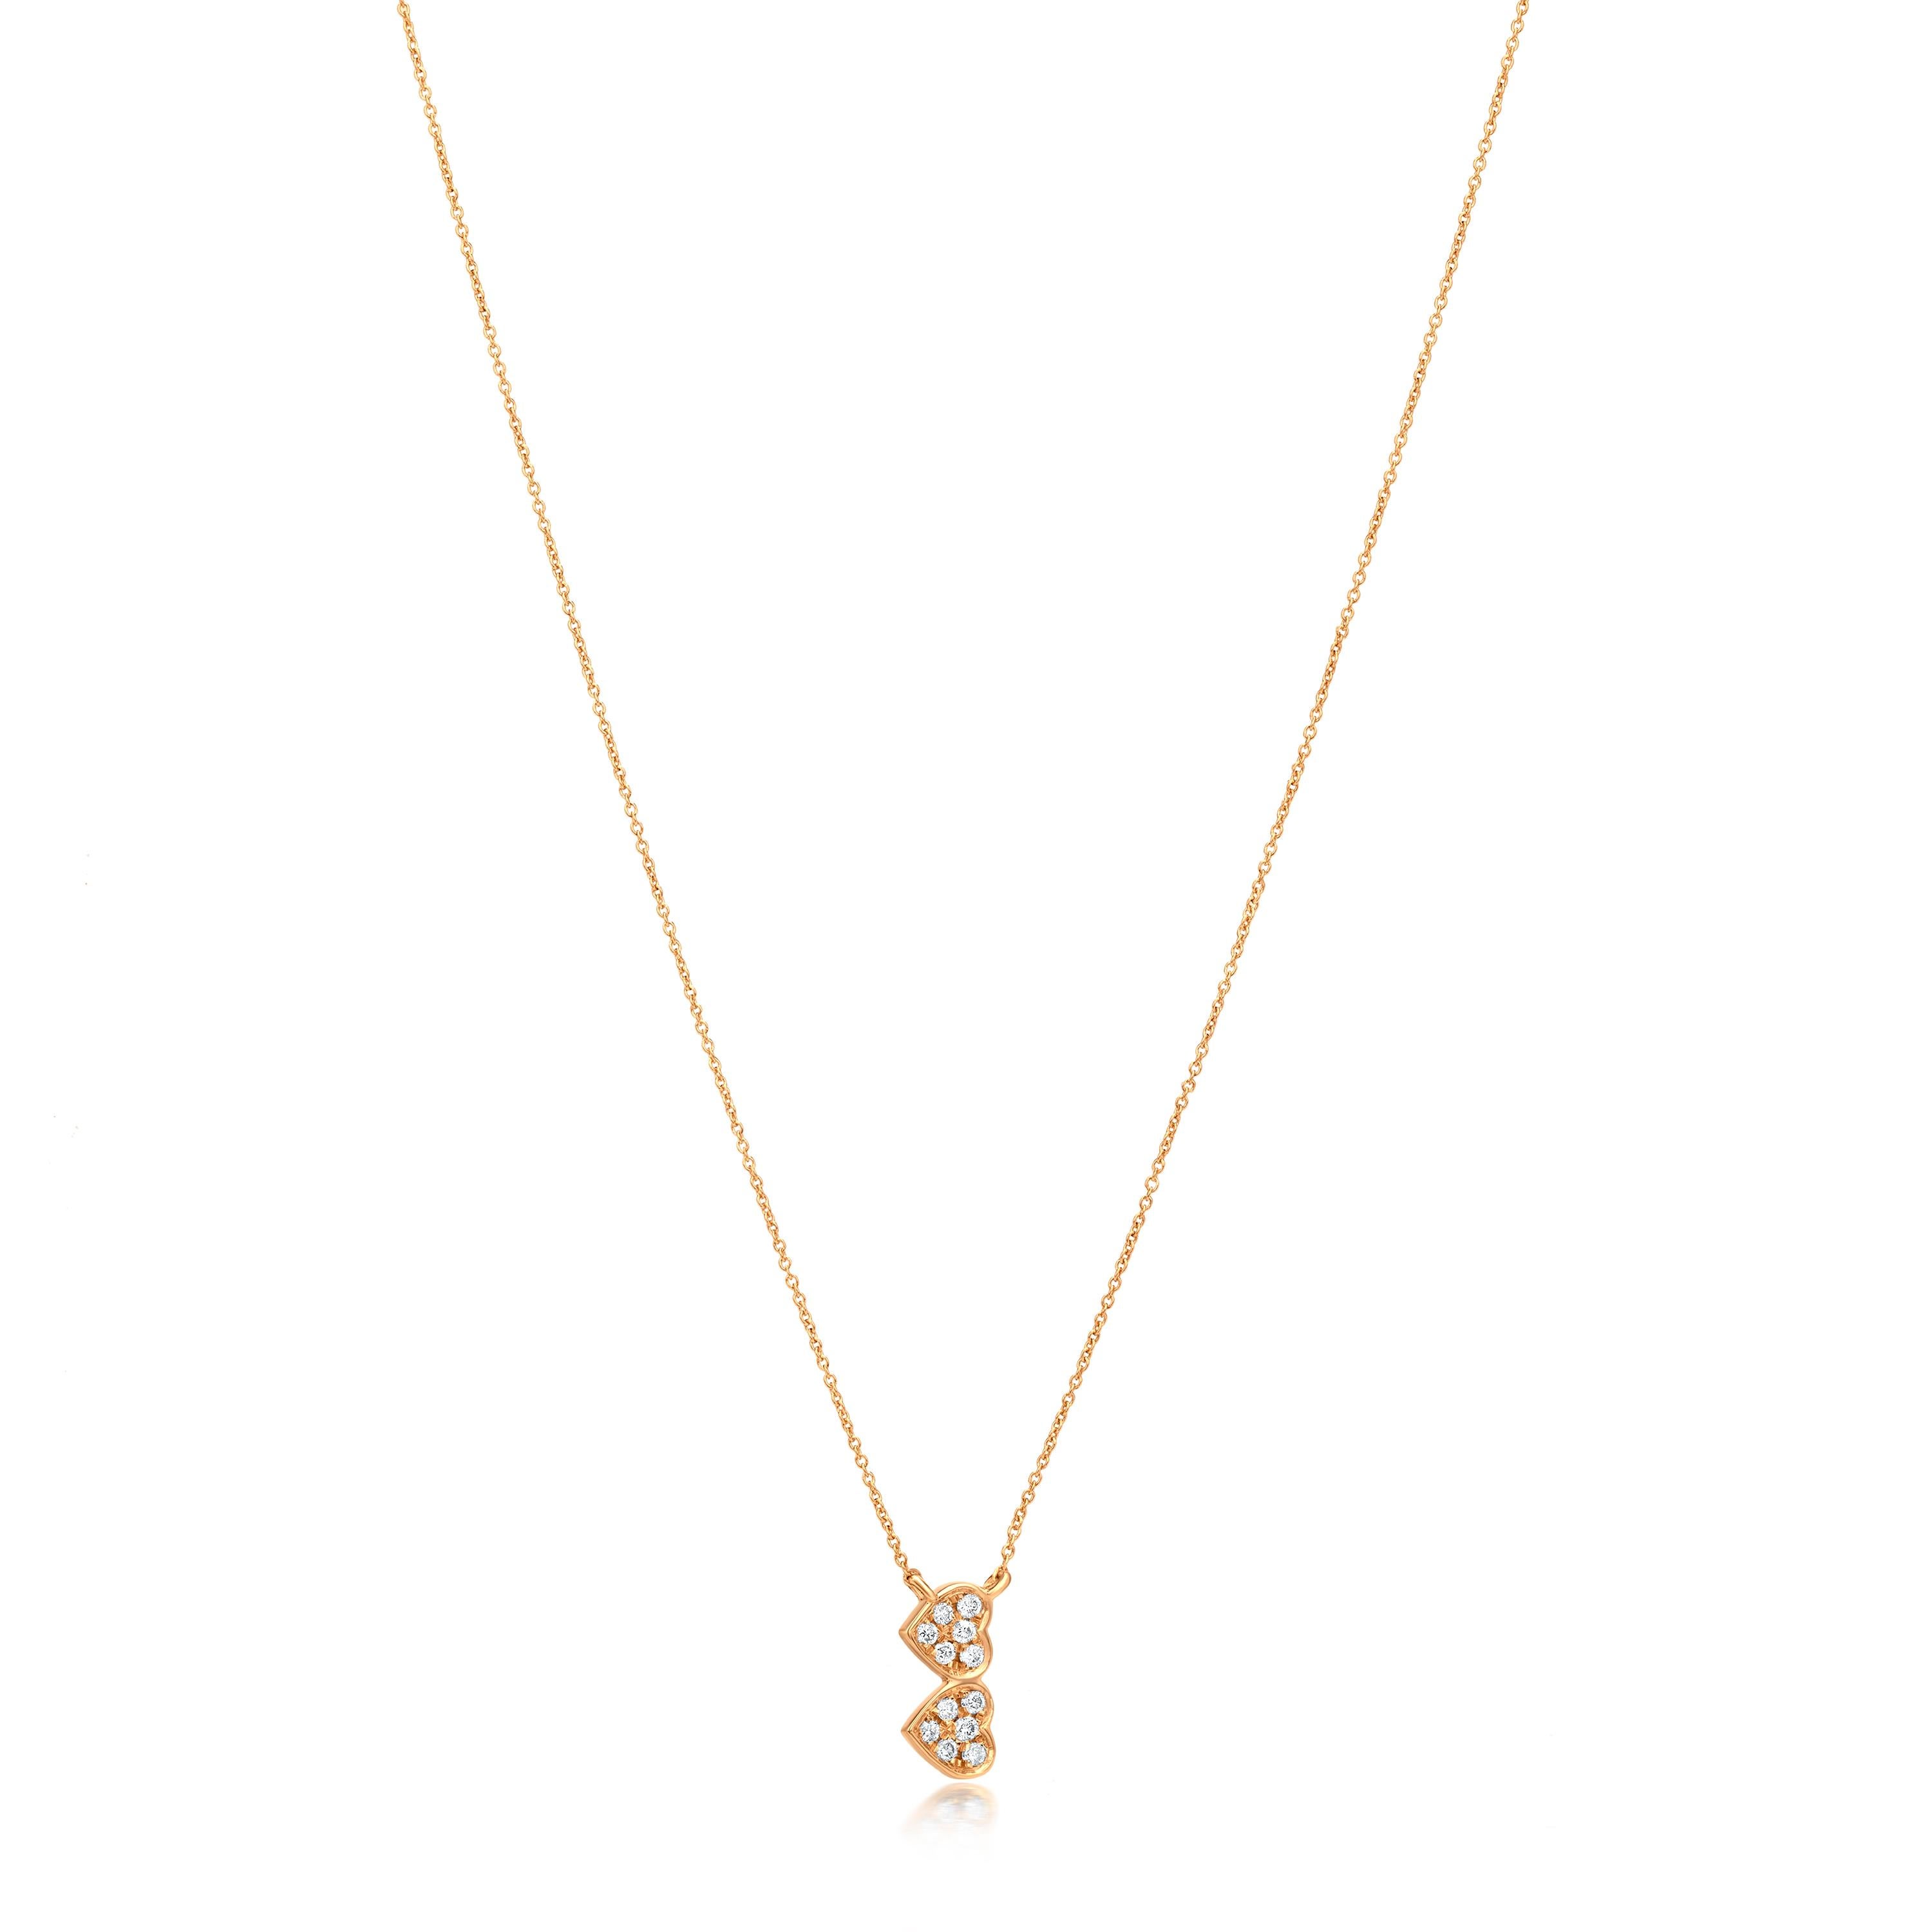 Contemporary Luxle Double Heart Diamond Pendant Necklace in 18k Yellow Gold